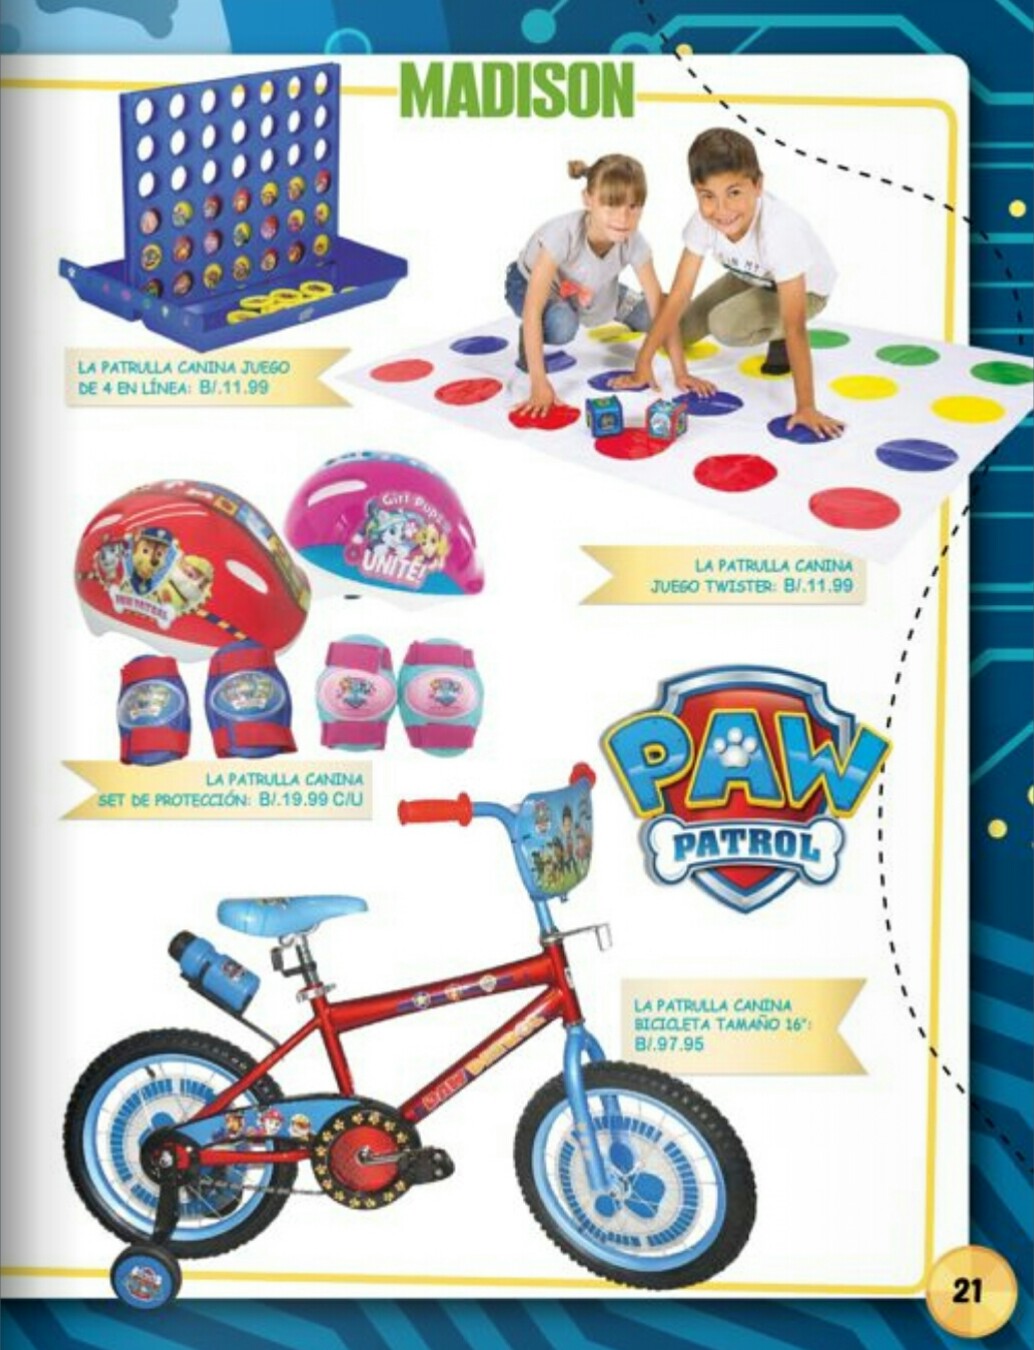 Catalogo juguetes madison store 2018 p20